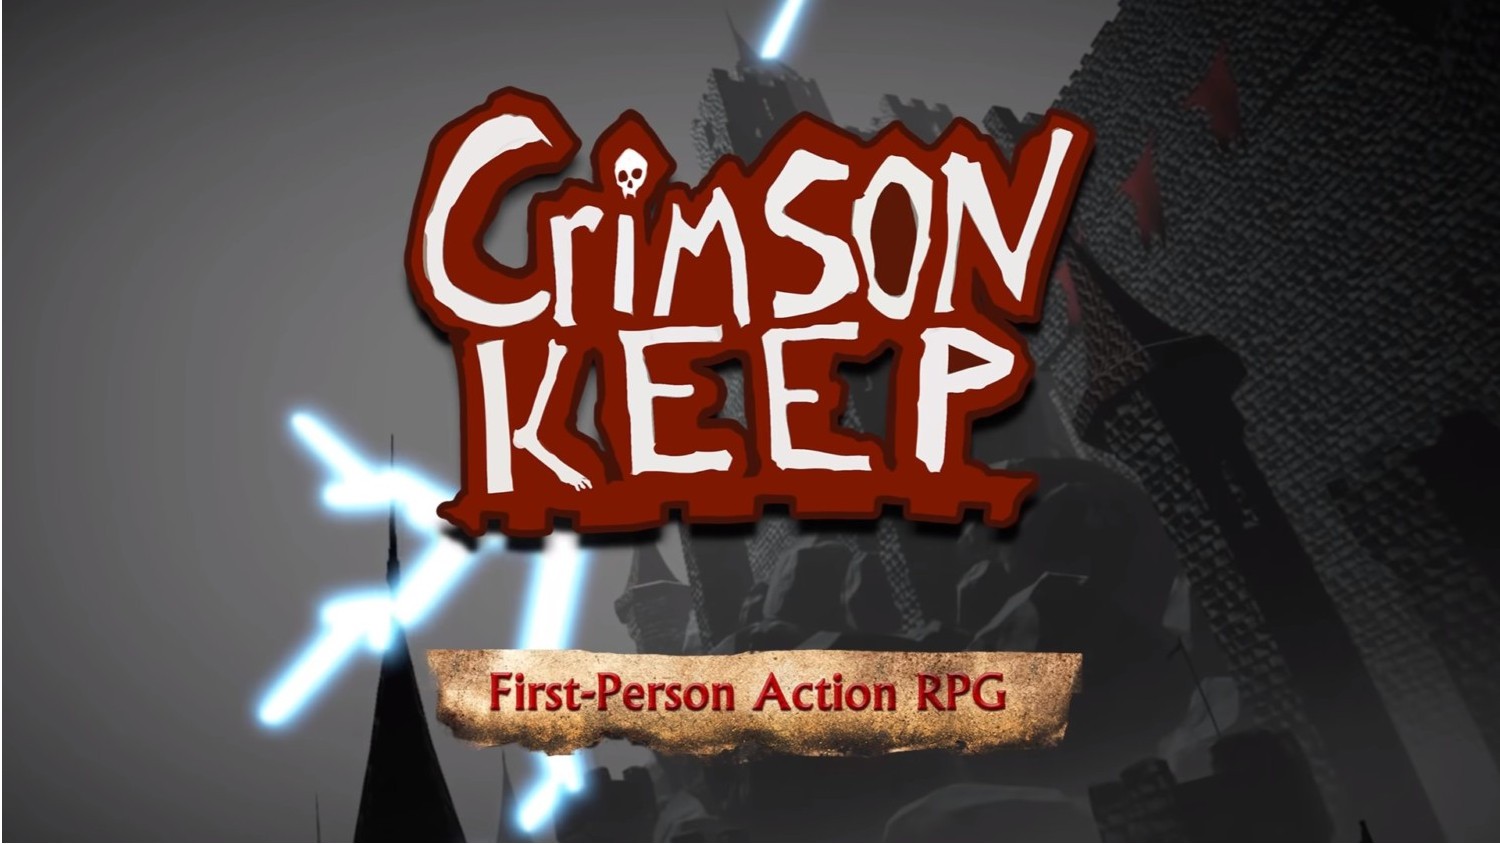 Crimson Keep Steam CD Key